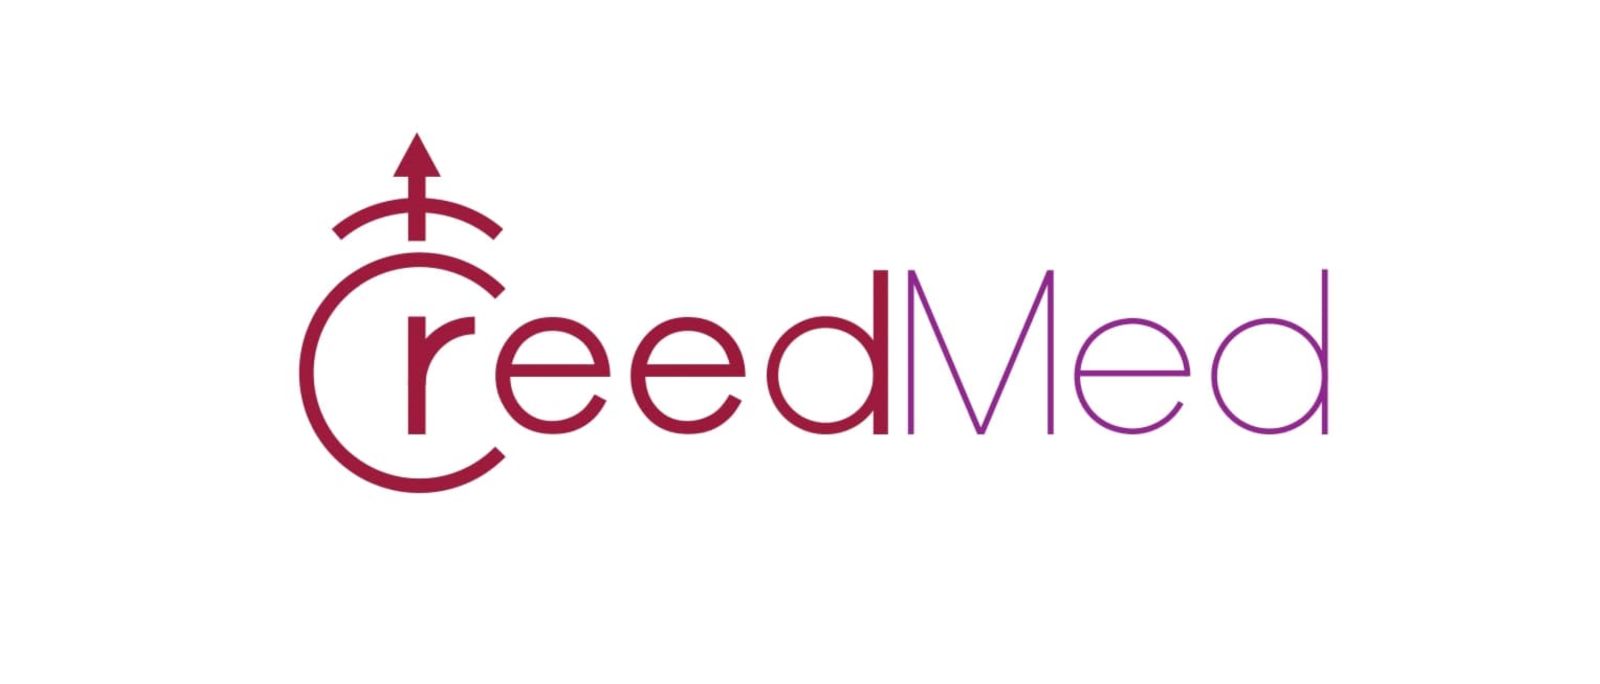 CreedMed logo